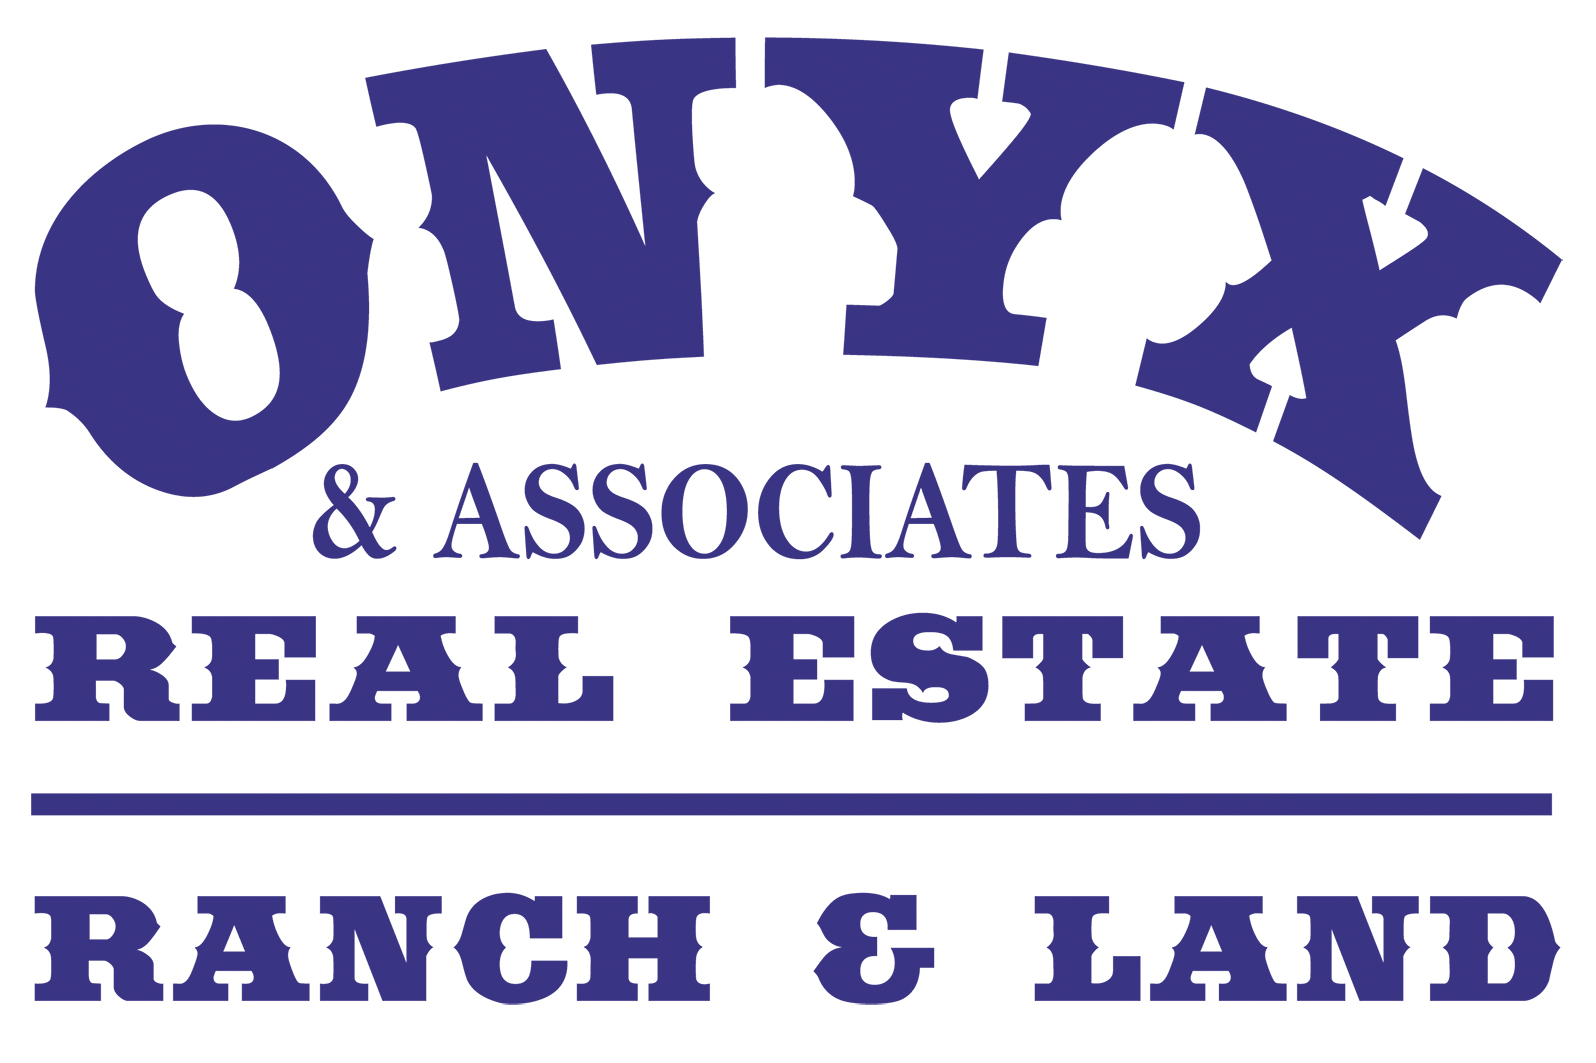 Onyx & Associates Real Estate